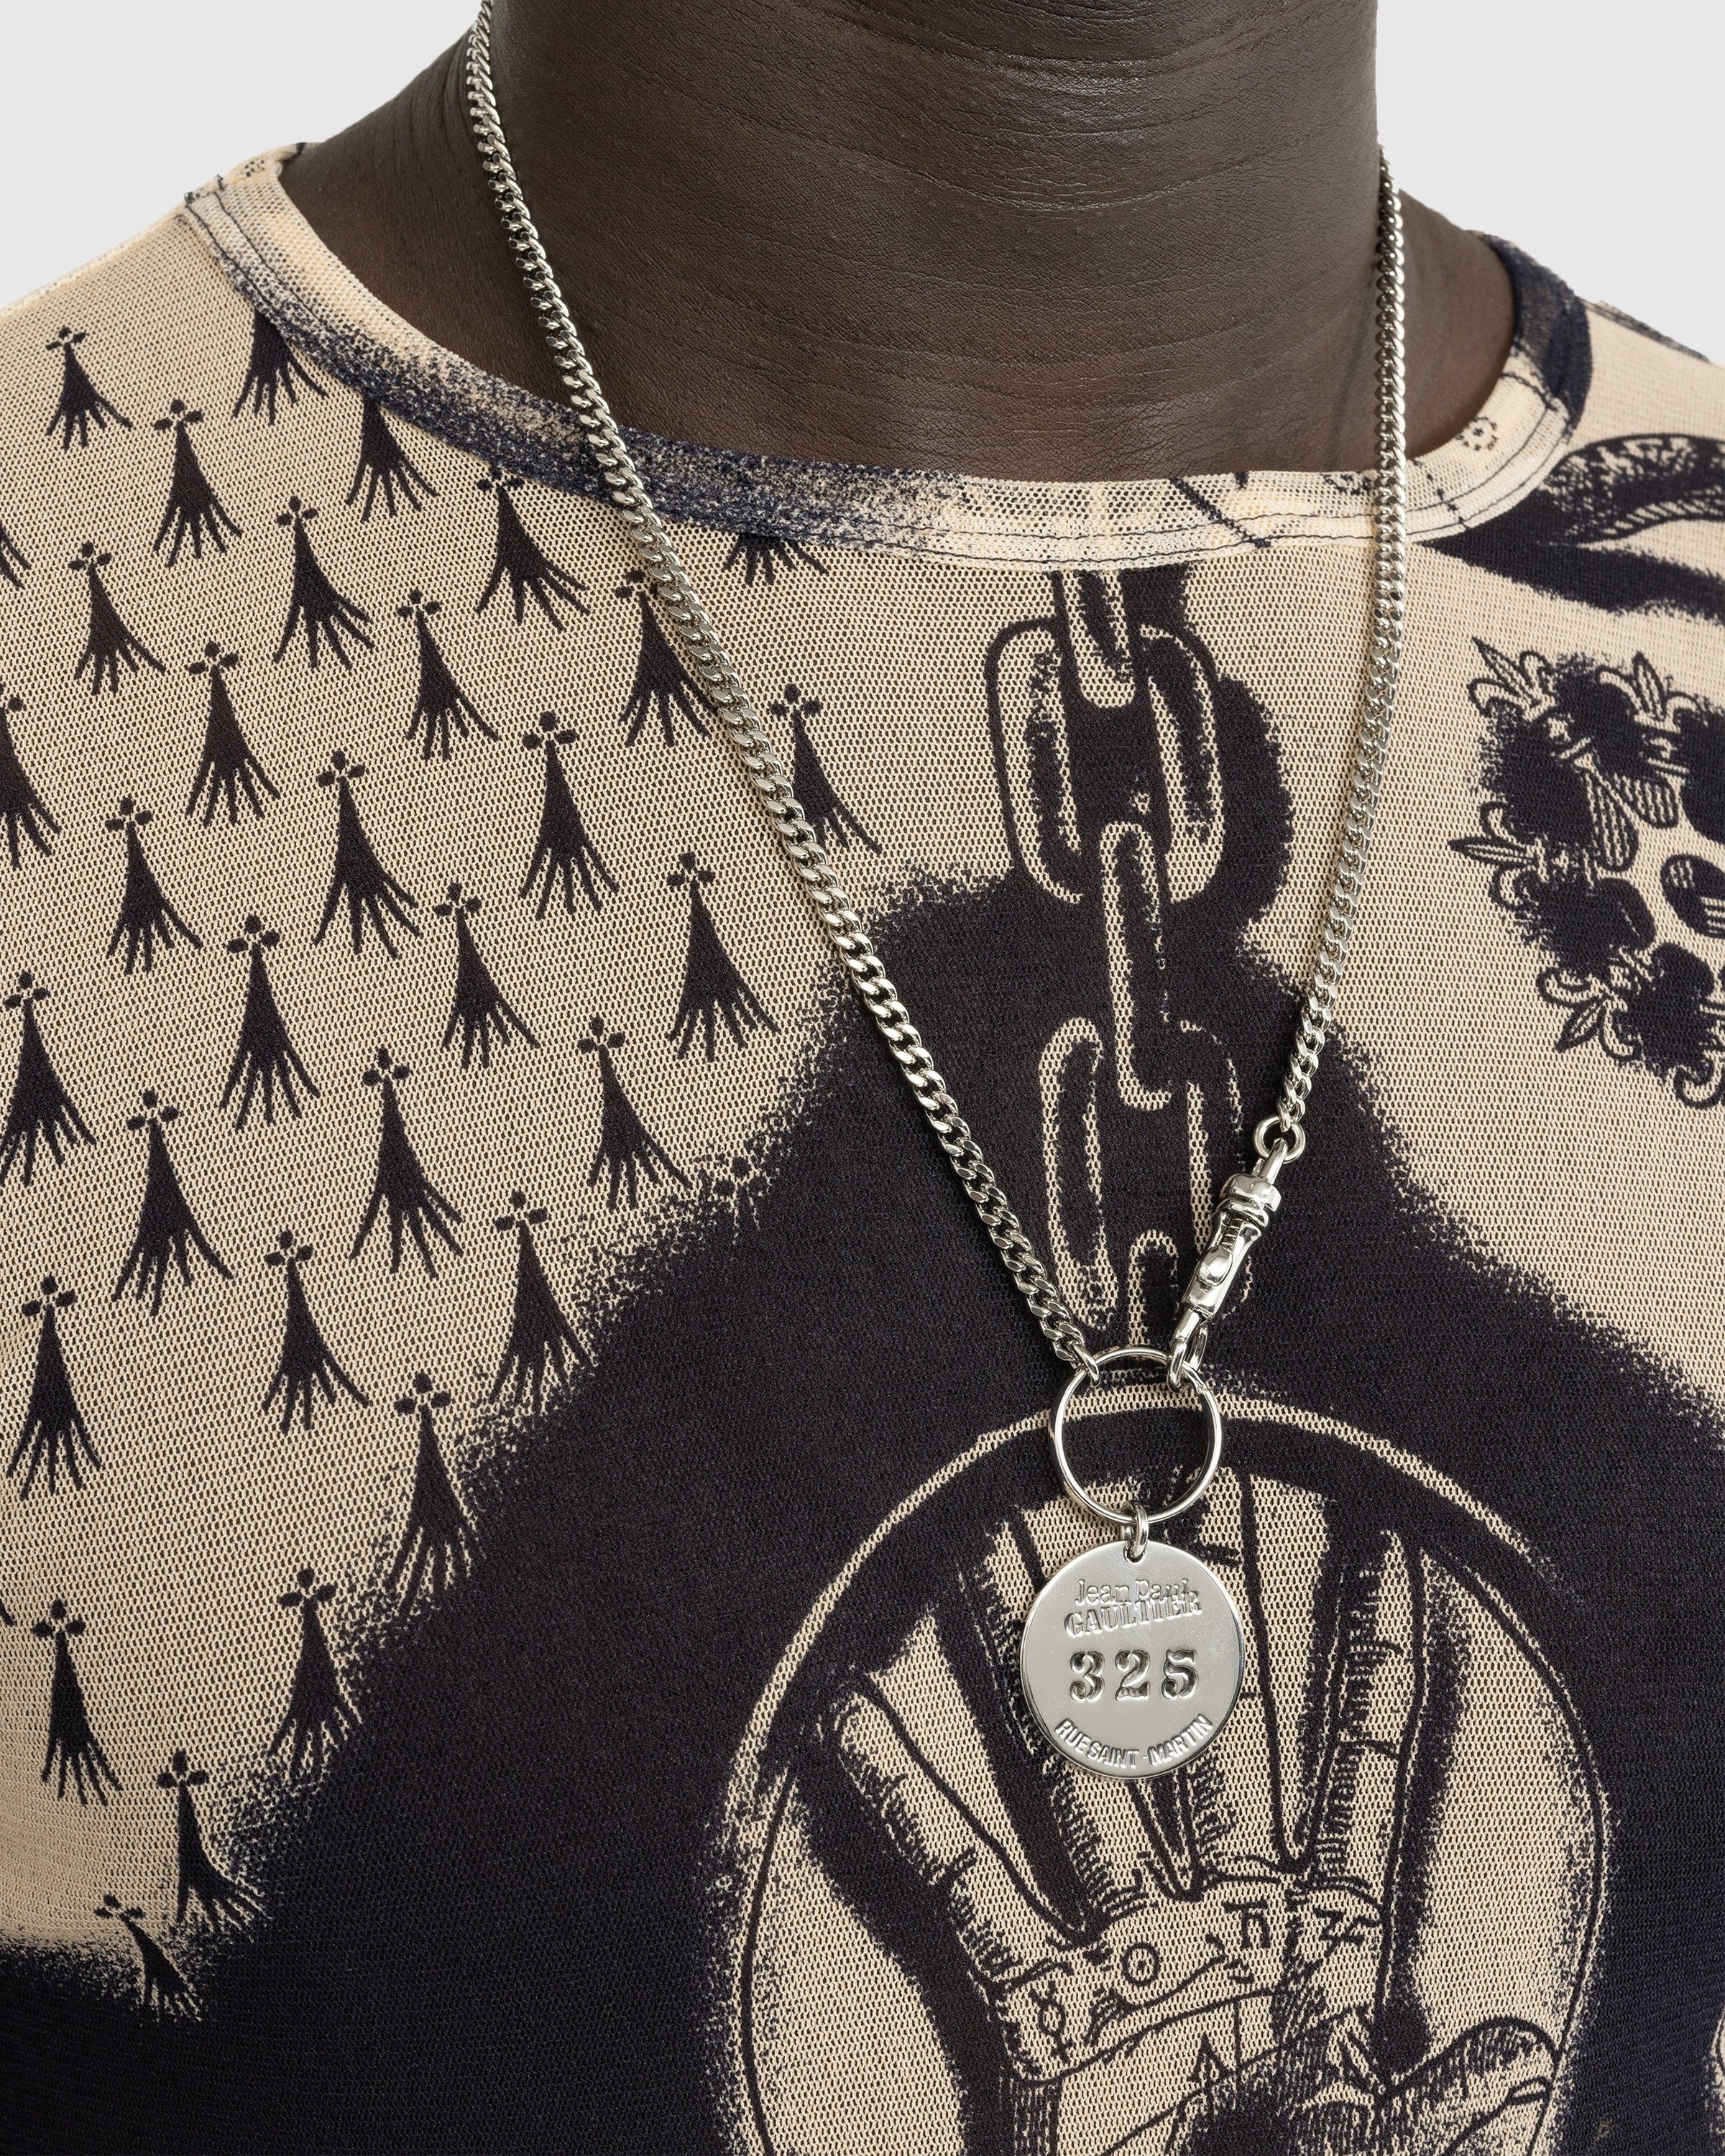 Jean Paul Gaultier – 325 Necklace Silver | Highsnobiety Shop